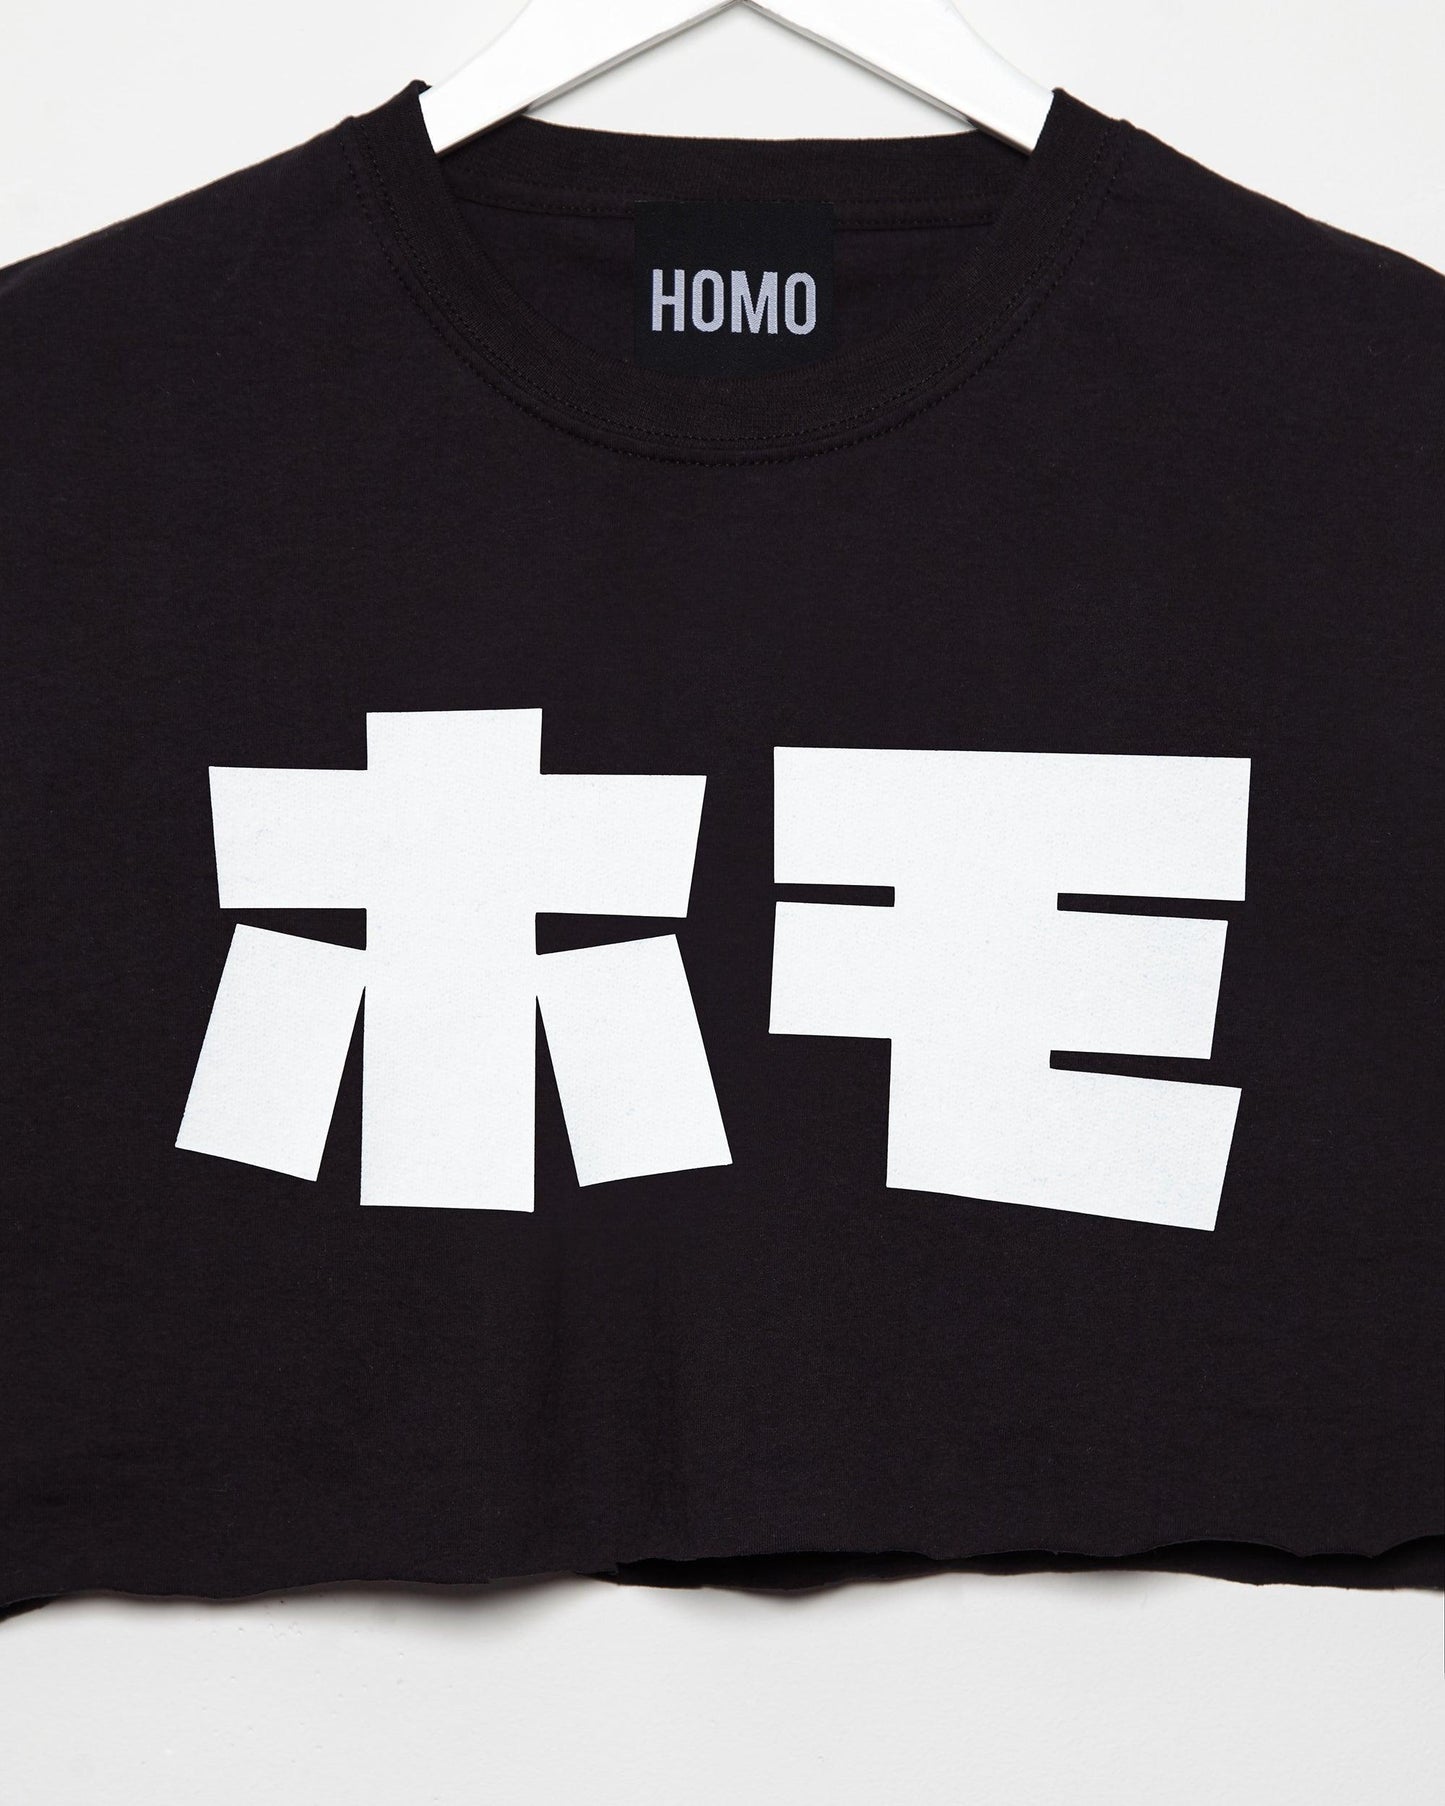 HOMO in Japanese, white on black - mens sleeveless crop top.